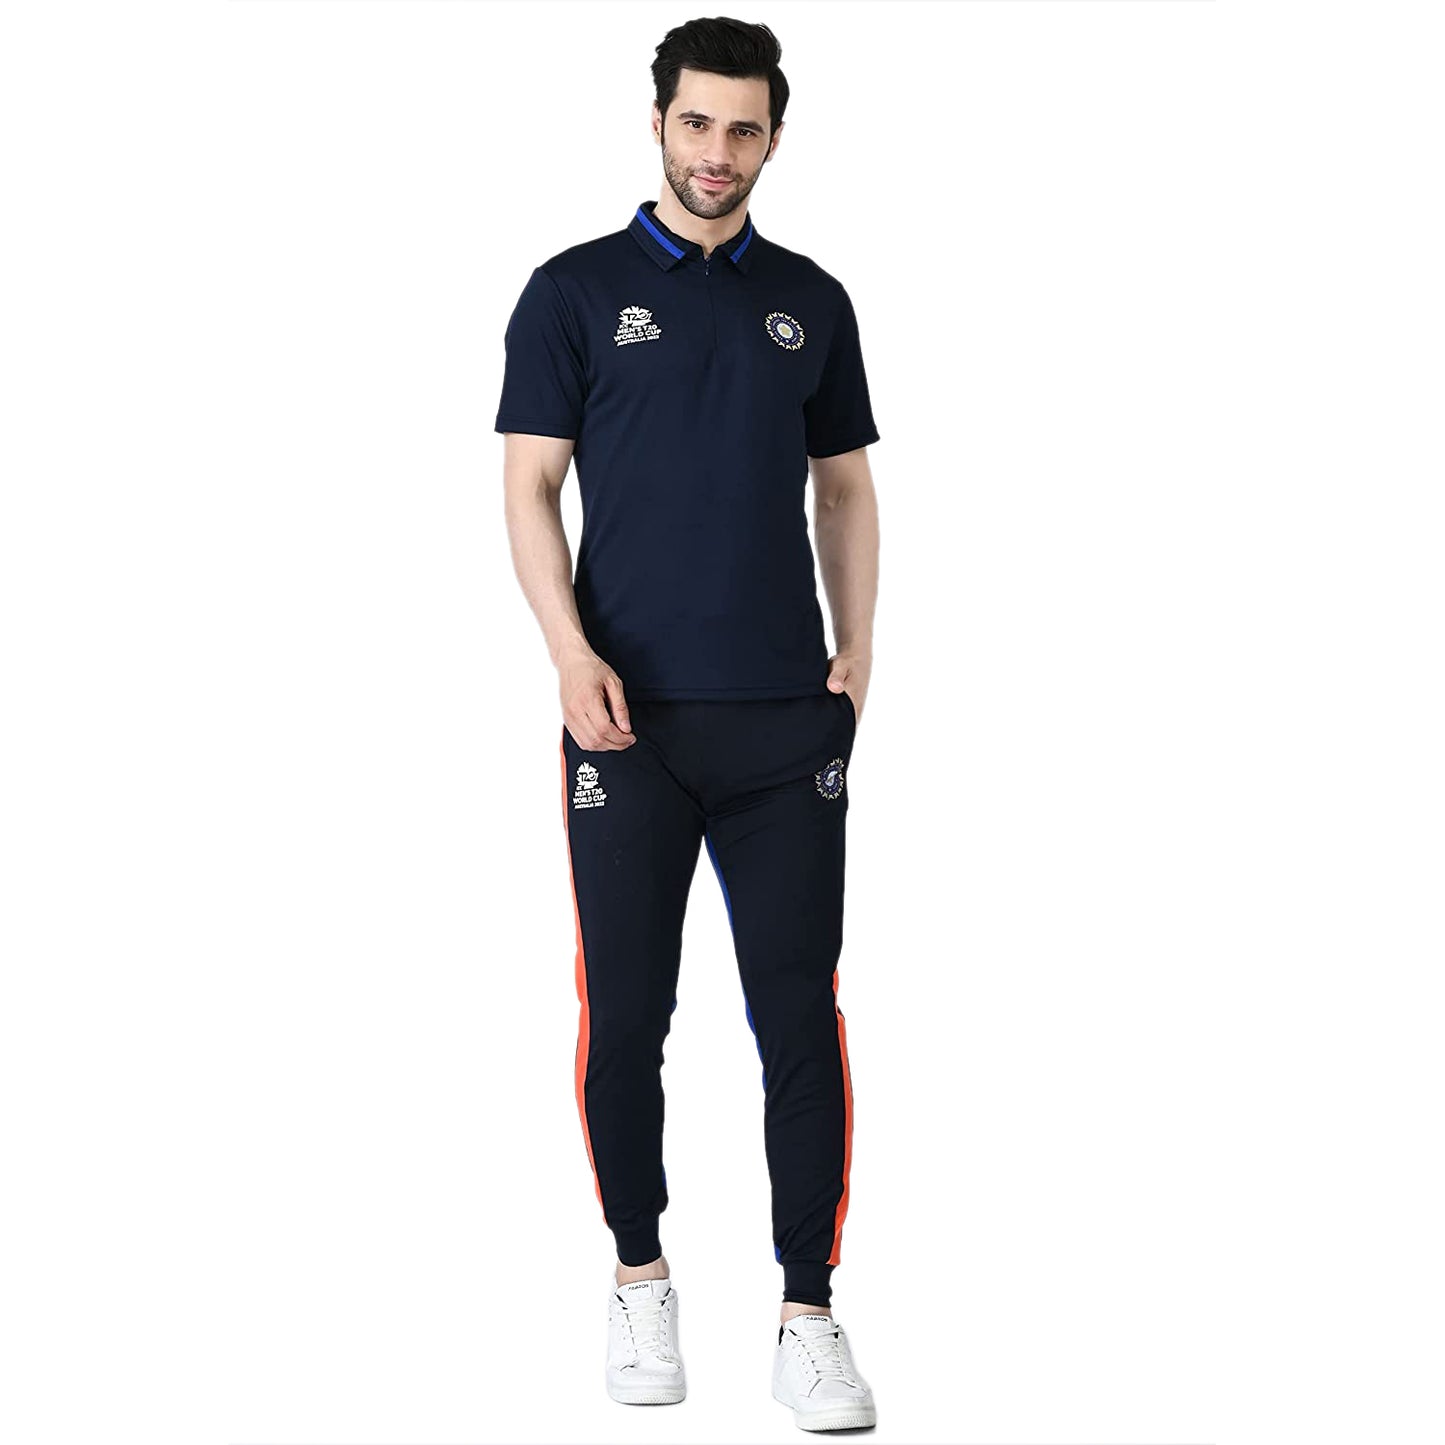 Playr Icc T20 Men's Regular Fit T-Shirt, Navy - Best Price online Prokicksports.com